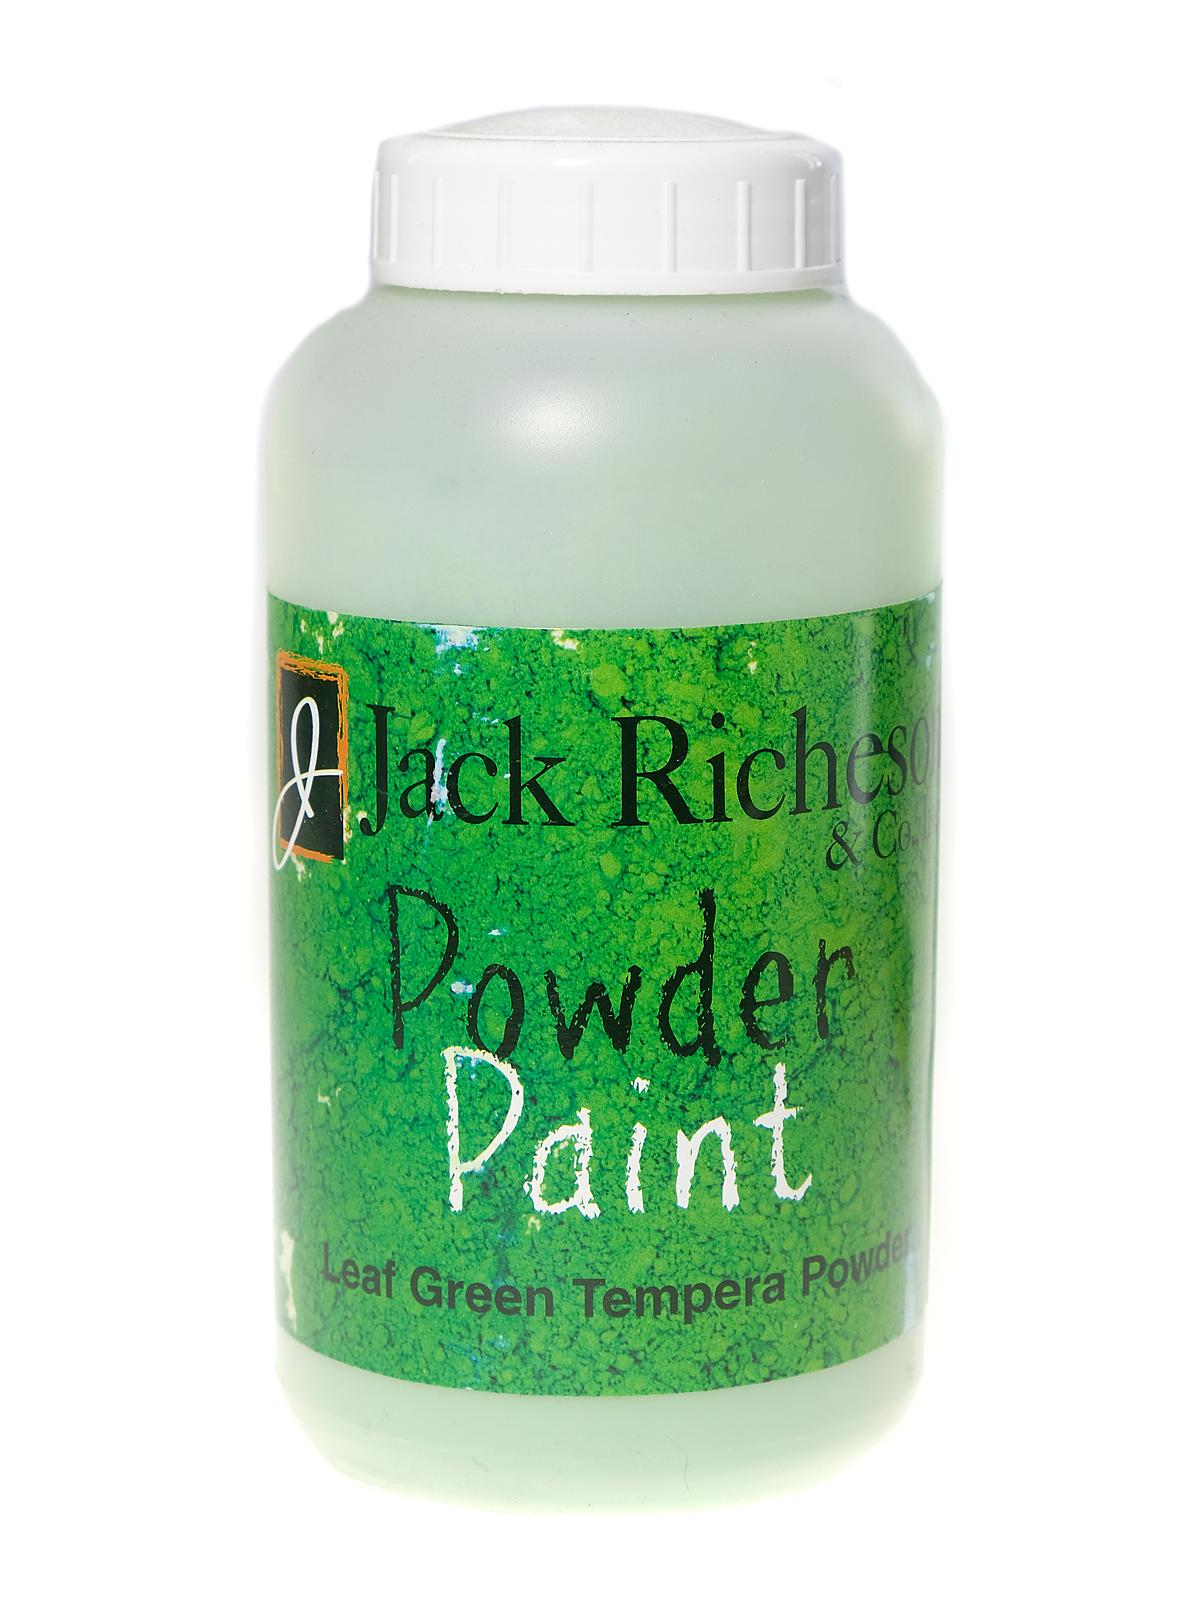 Powder Tempera Paint Leaf Green 16 Oz. Jar